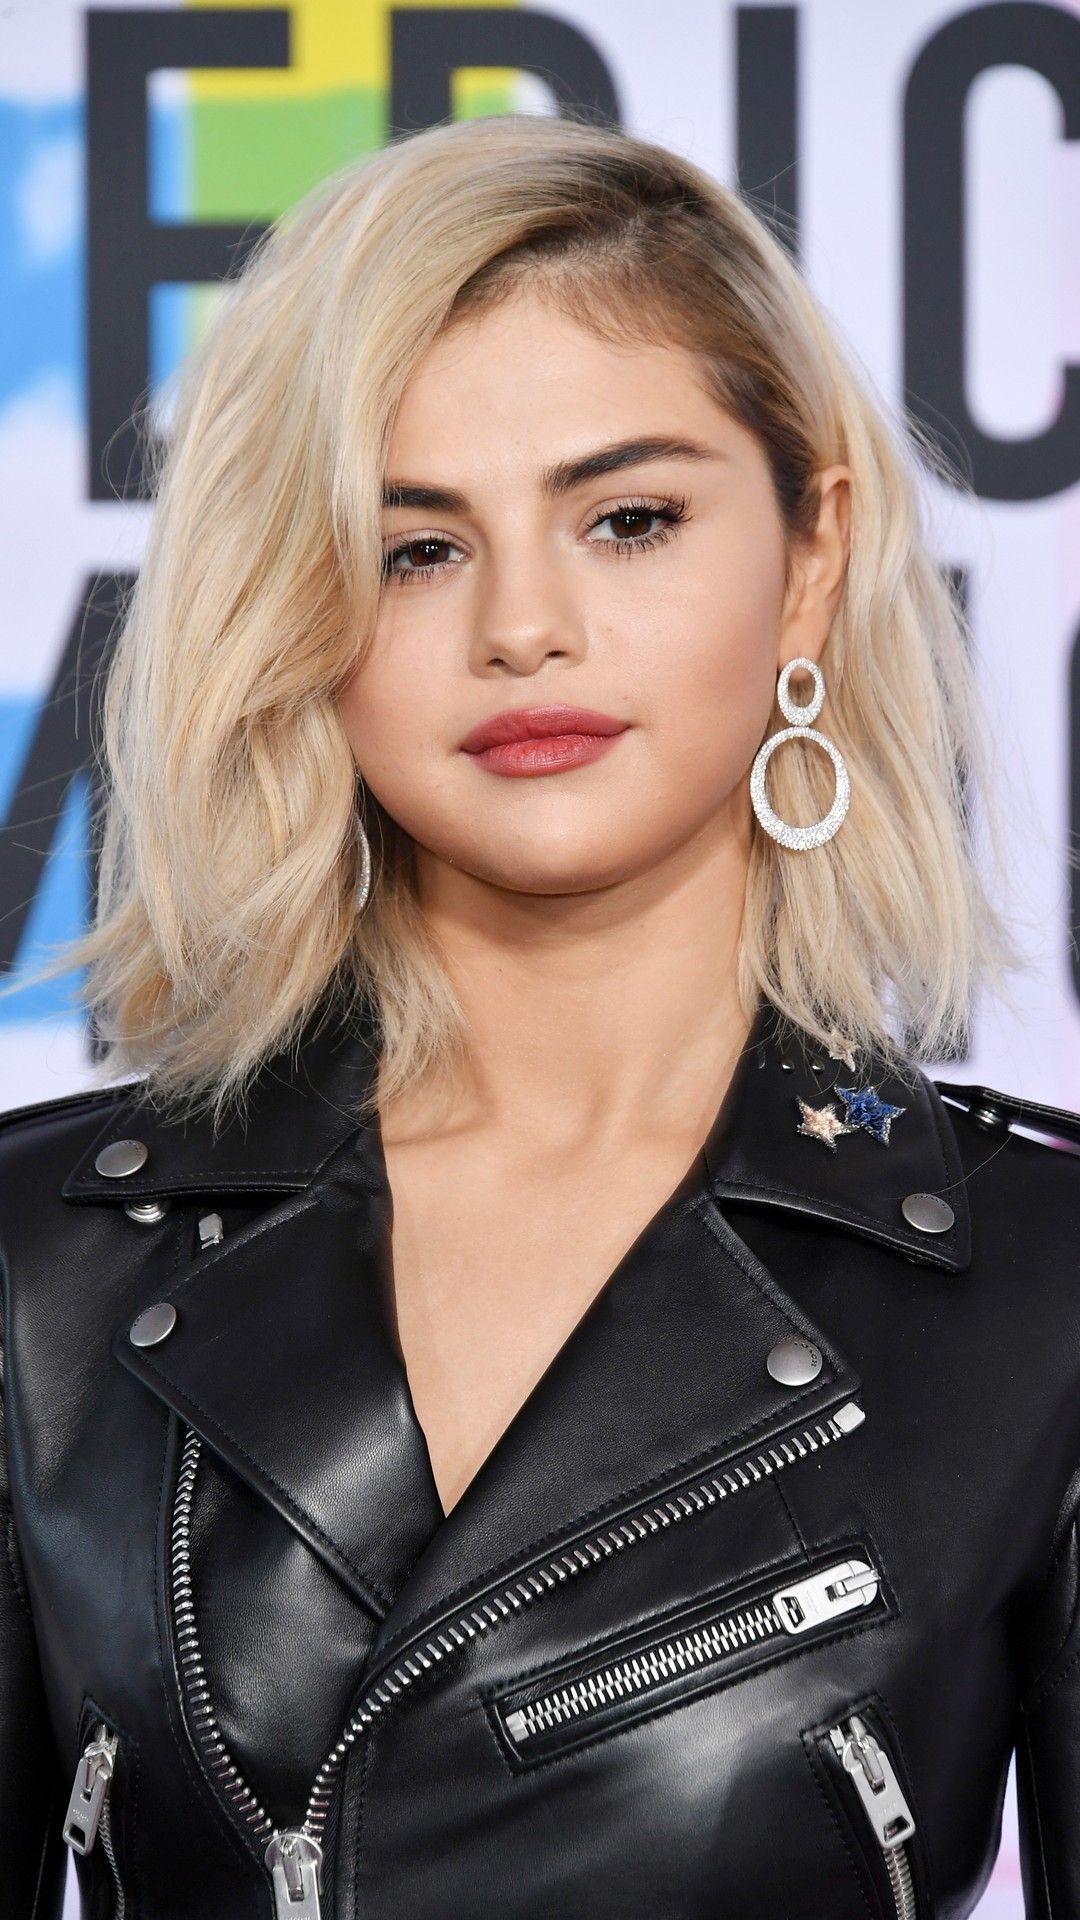 Hình nền iPhone 1080x1920 Selena Gomez Blonde.  2019 Hình nền iPhone 3D